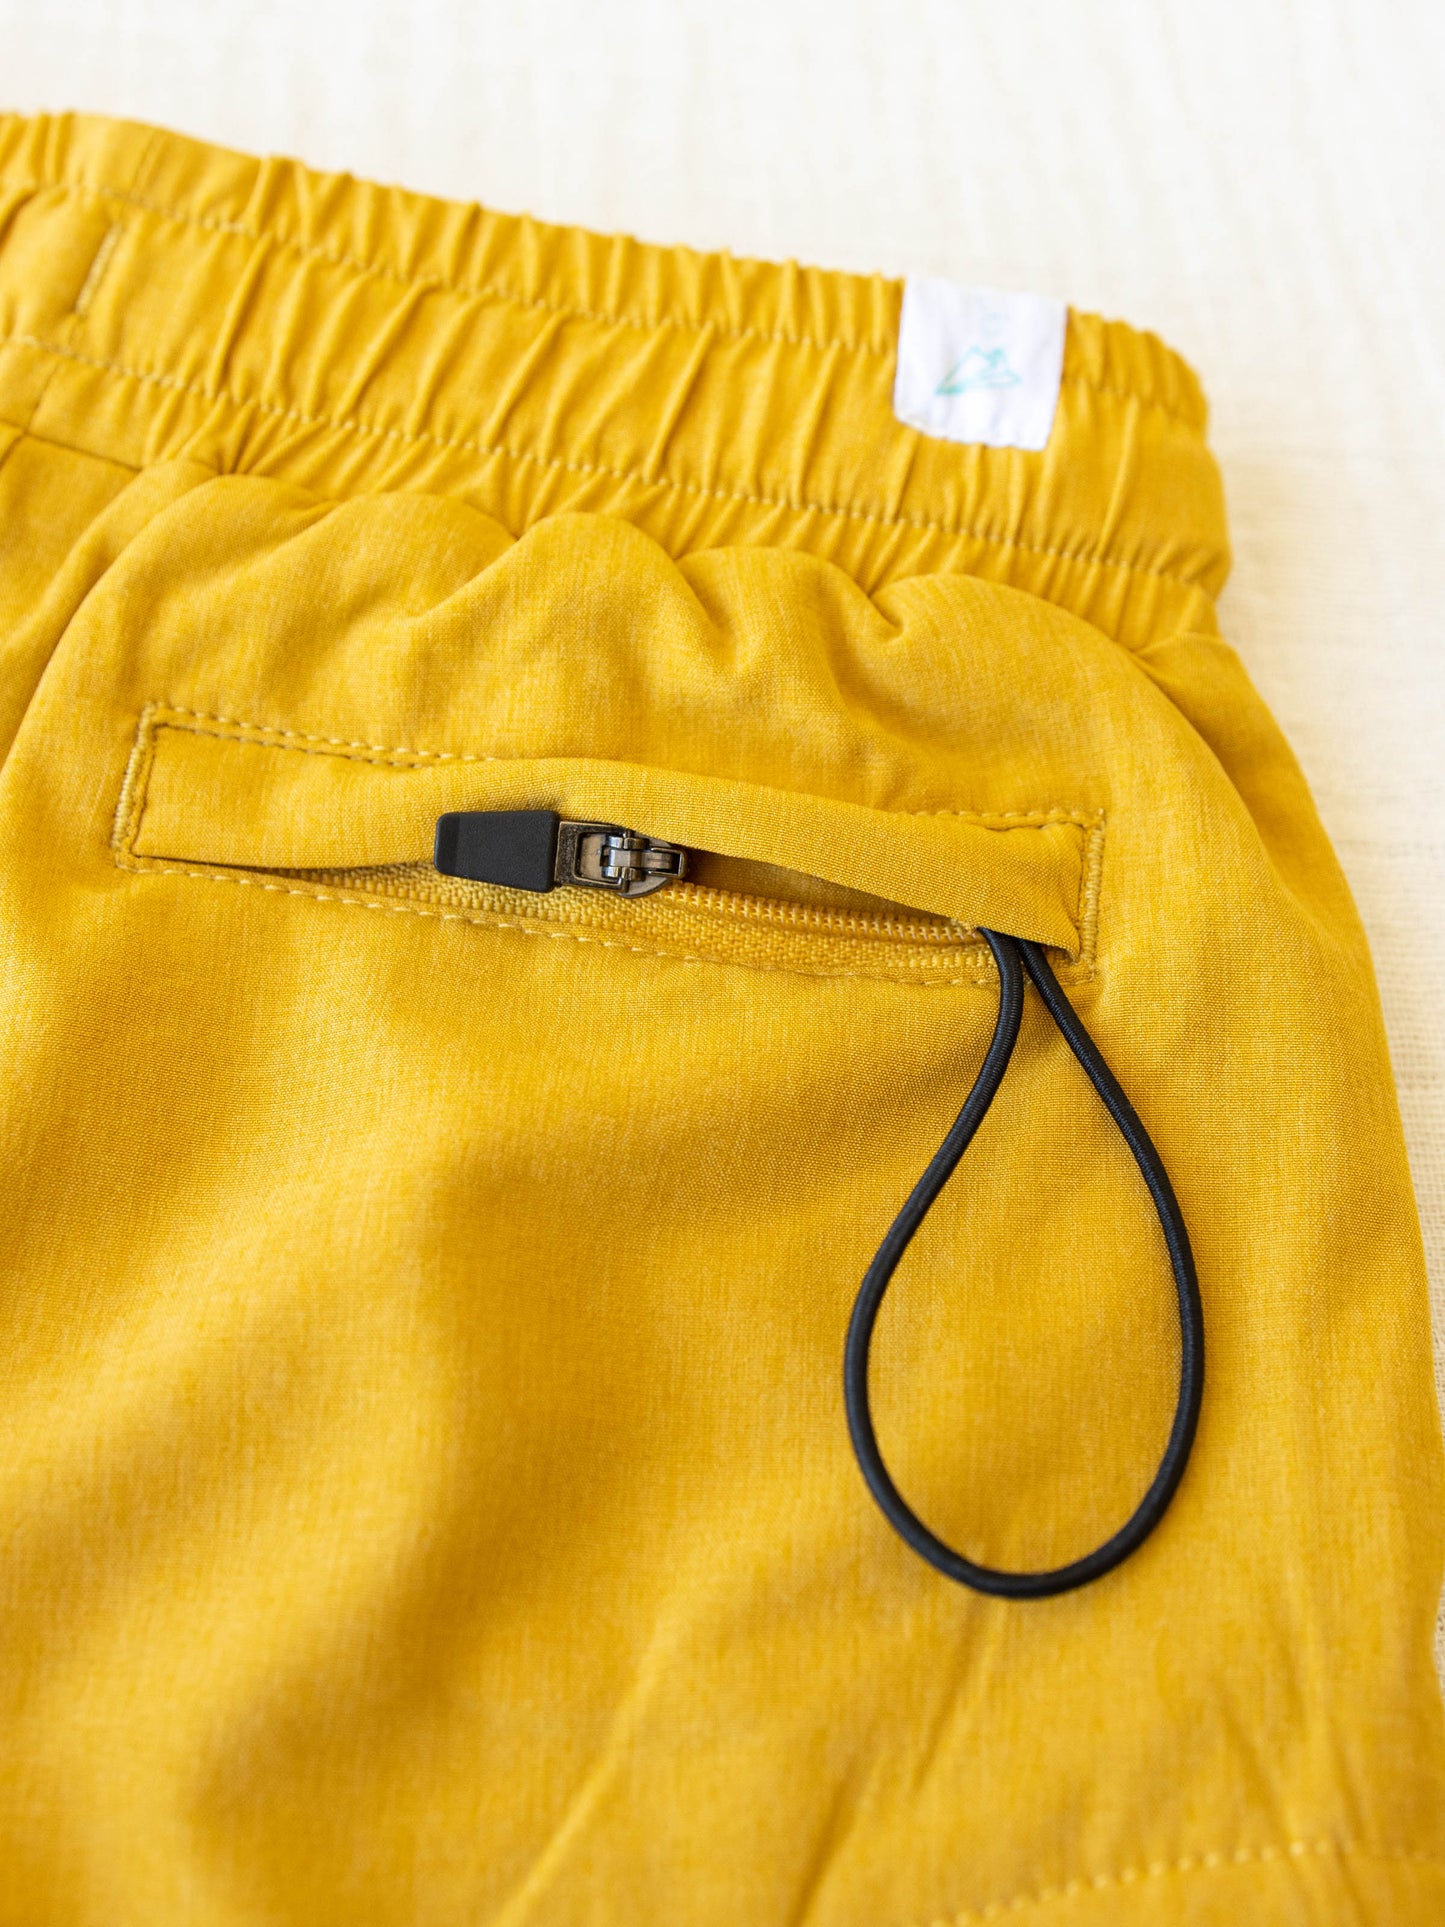 Closeup of the zippered back pocket.